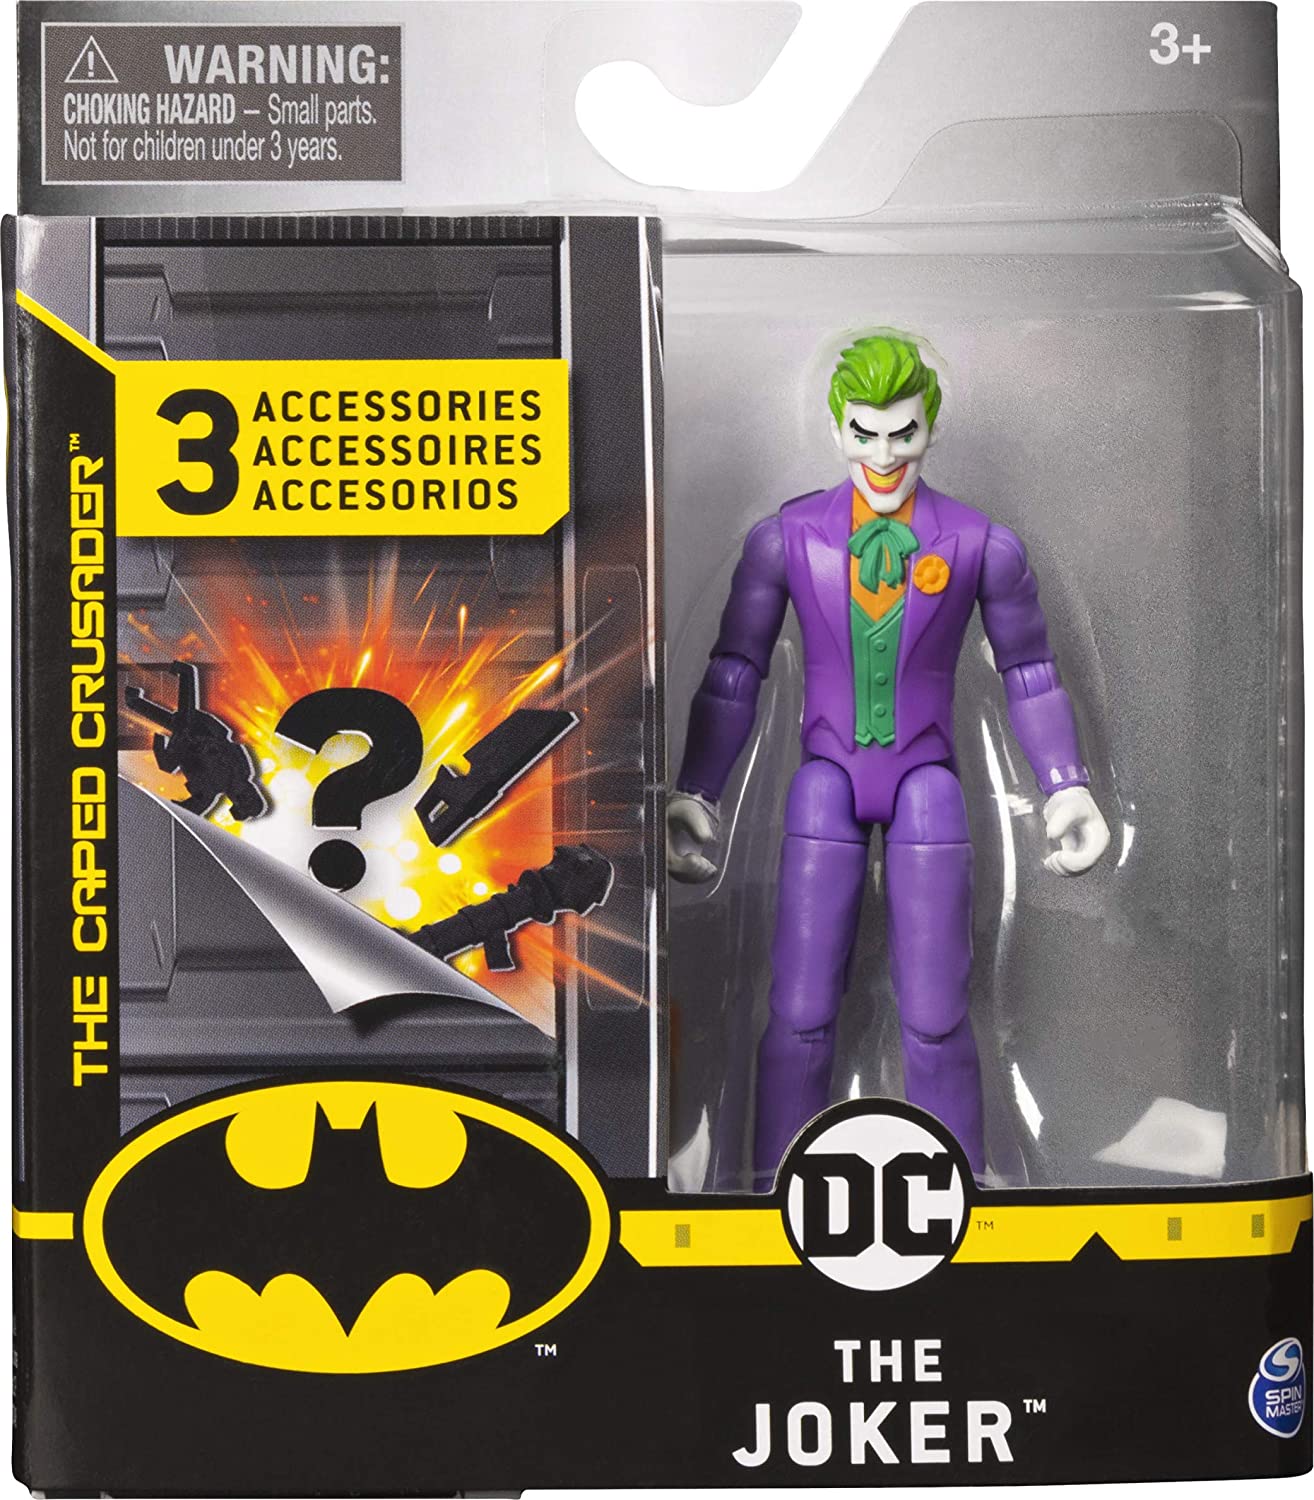 Batman Batman Action Figure